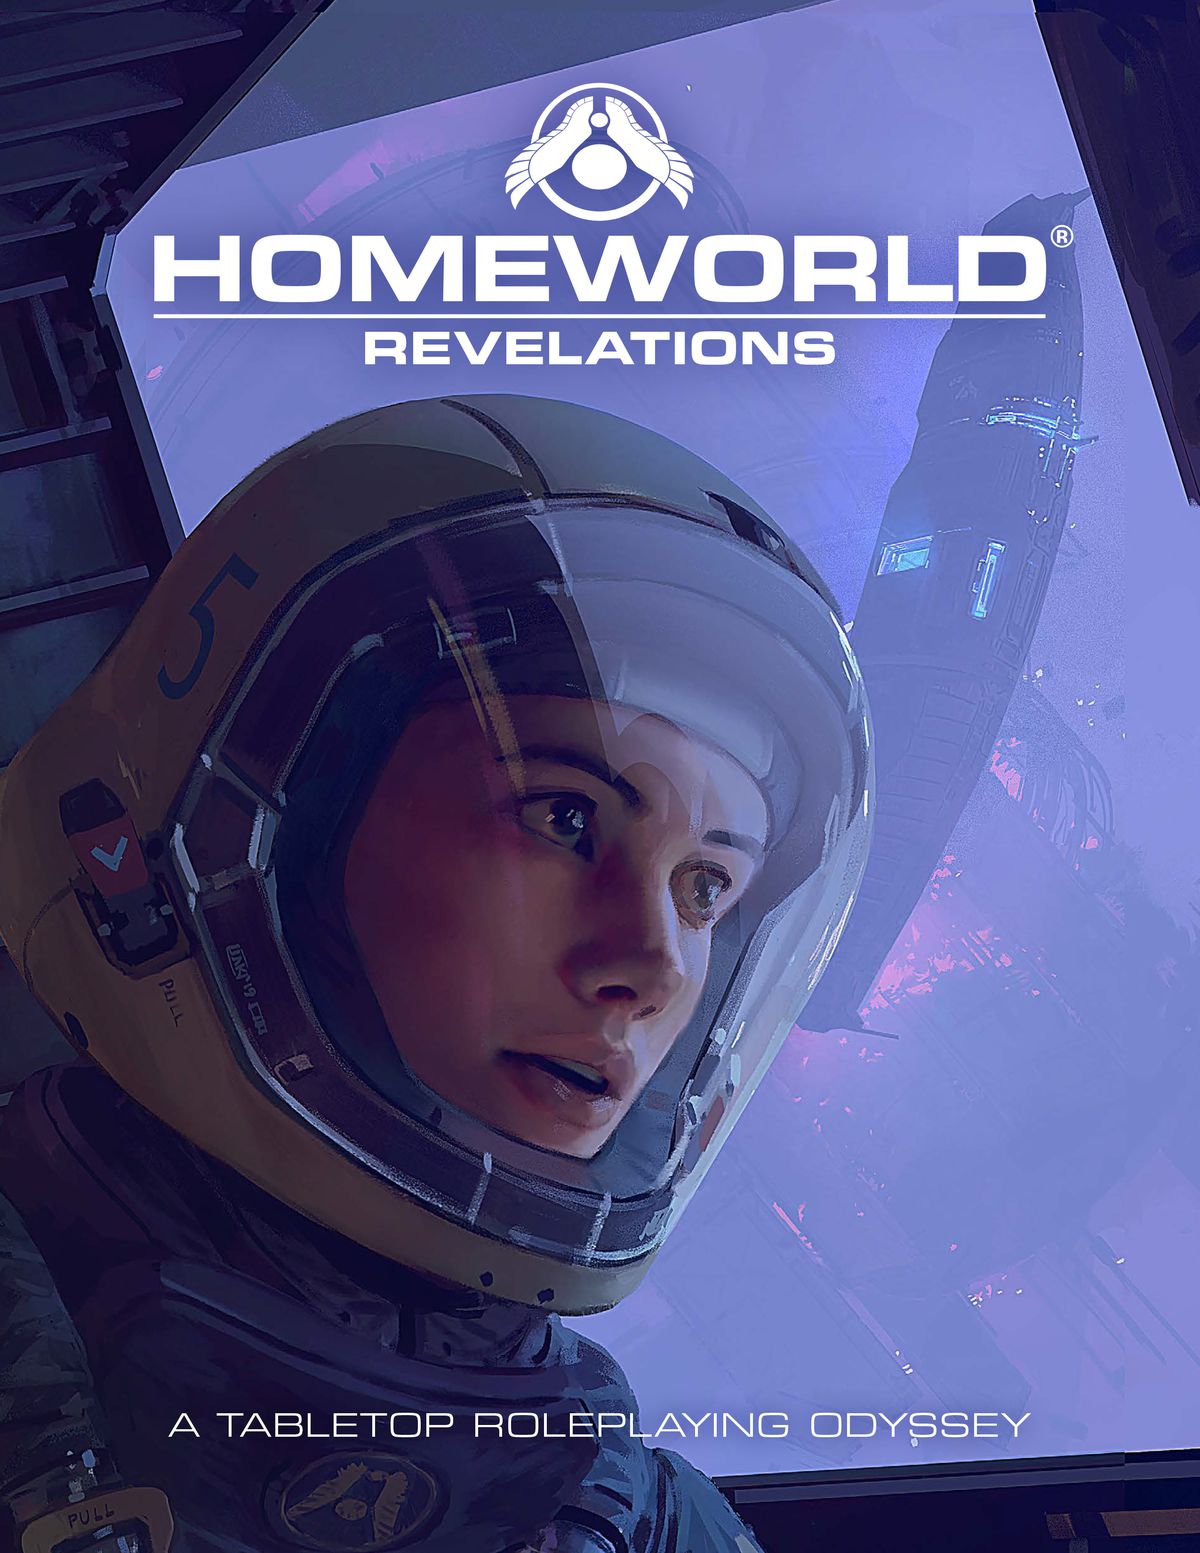 Copertina e logo per il regolamento base di Homeworld: Revelations.